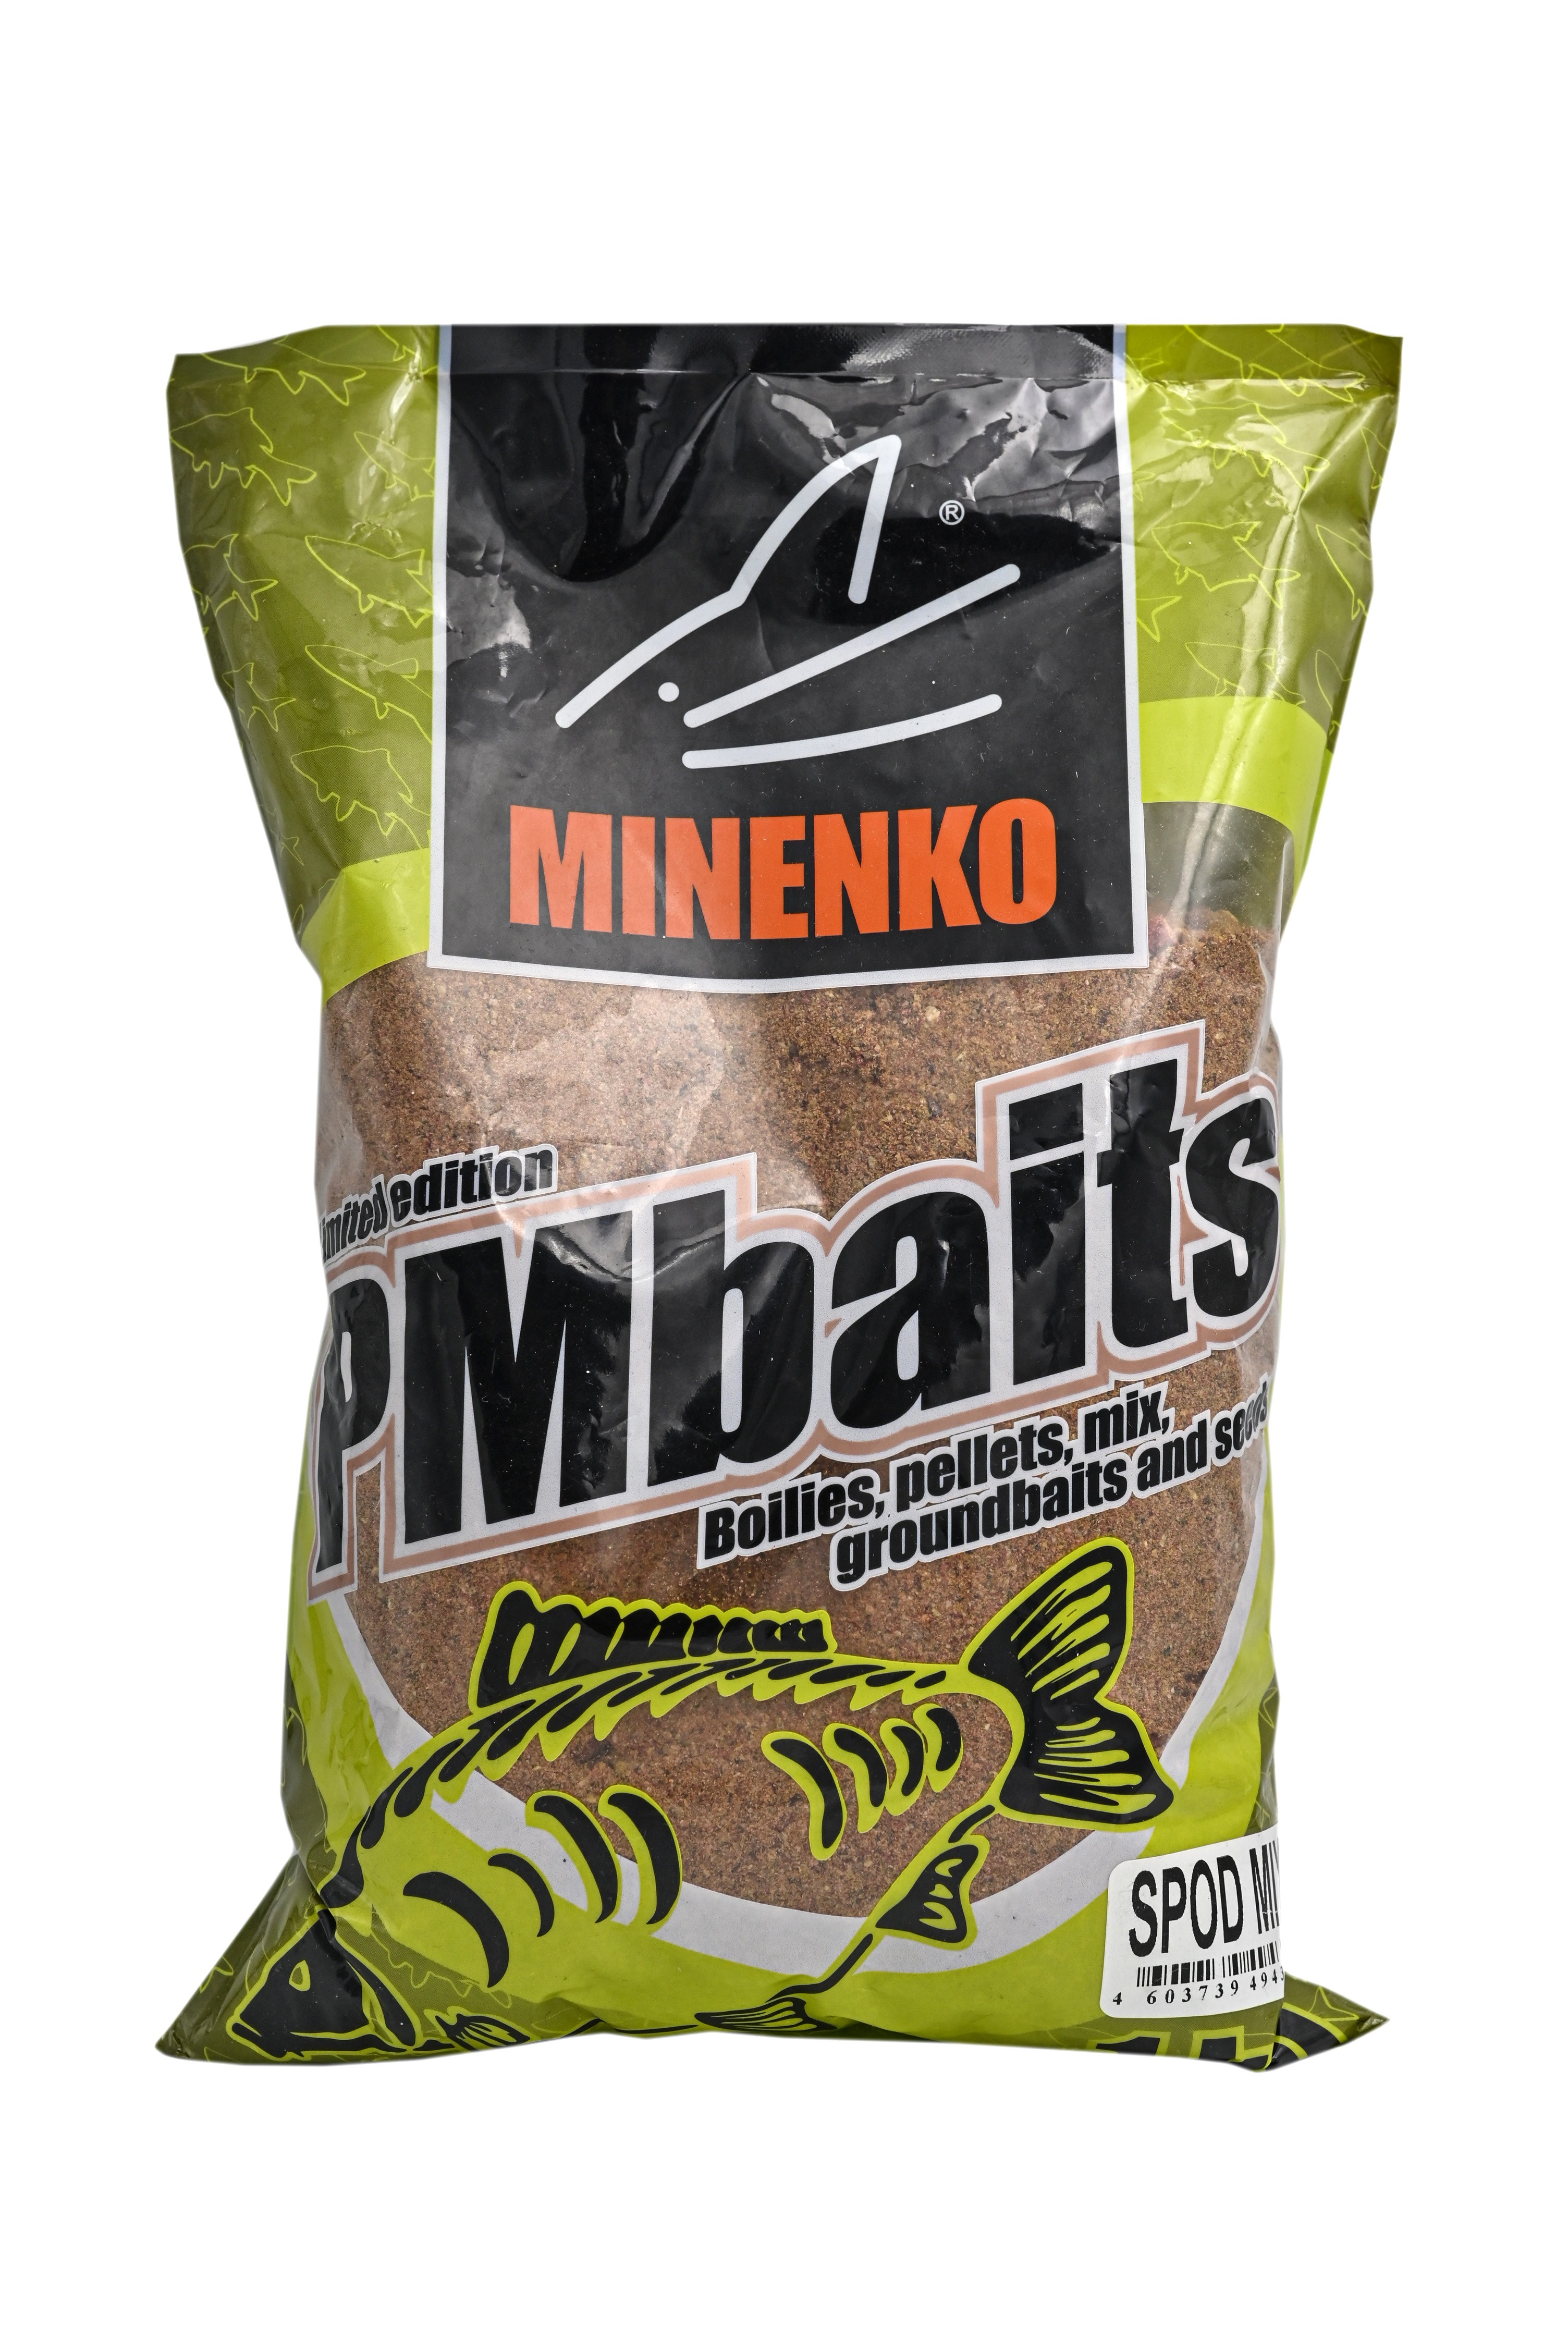 Прикормка MINENKO PMbaits Groundbaits 1кг spod mix aroma free - фото 1